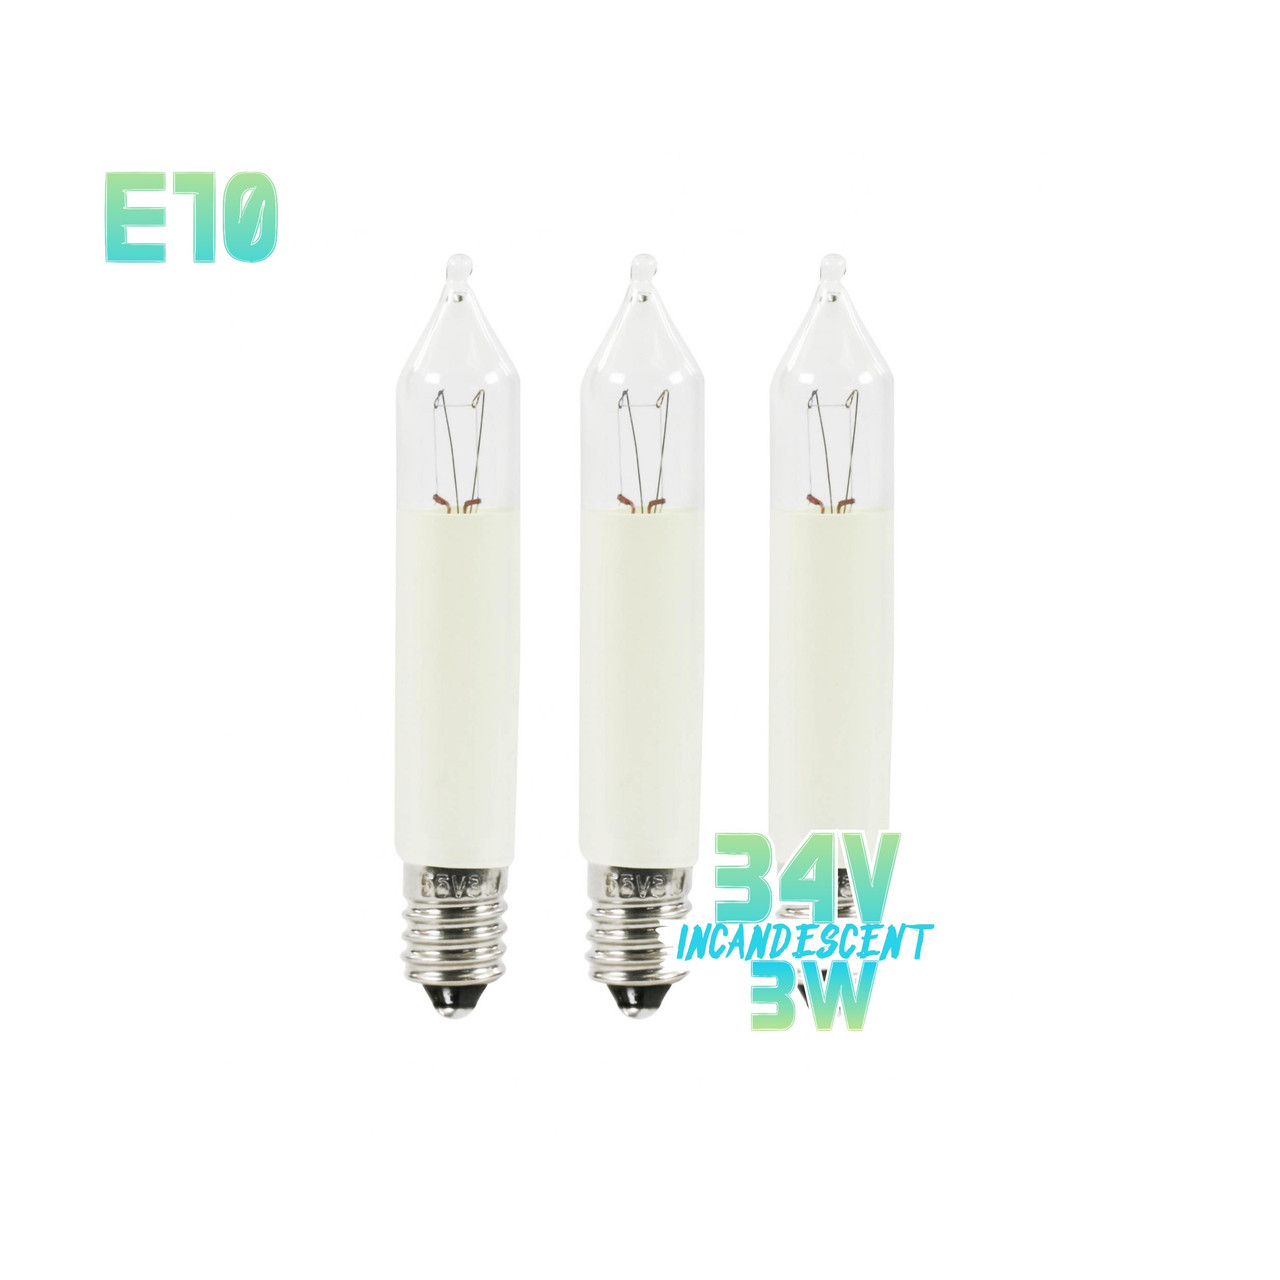 THREE Bulbs Candlestick Style 34V 3W Top Arch - ChristKindl-Markt